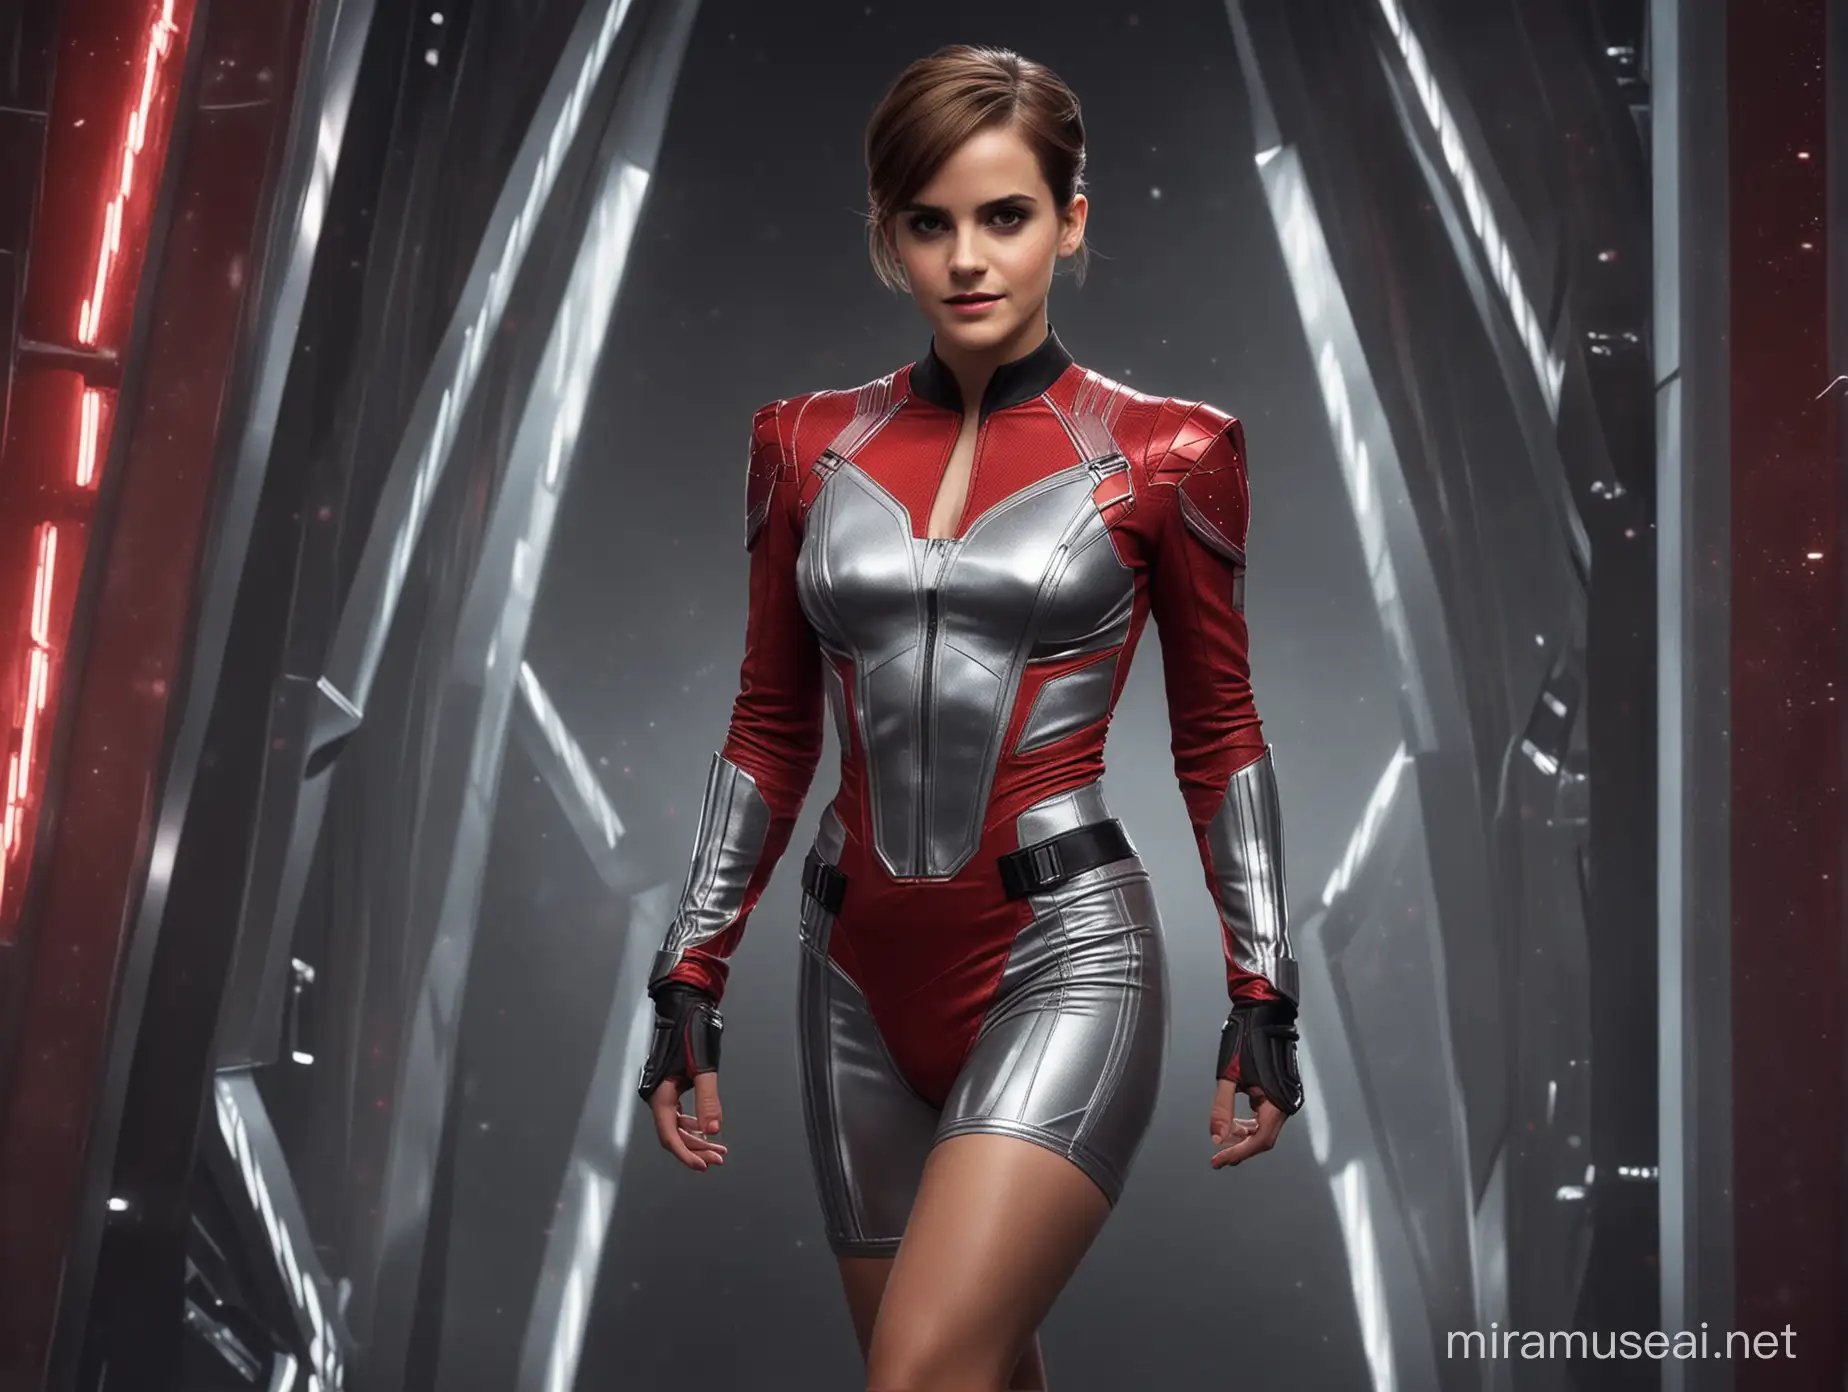 Elegant Emma Watson in Futuristic Starfleet Uniform with HighTech Details